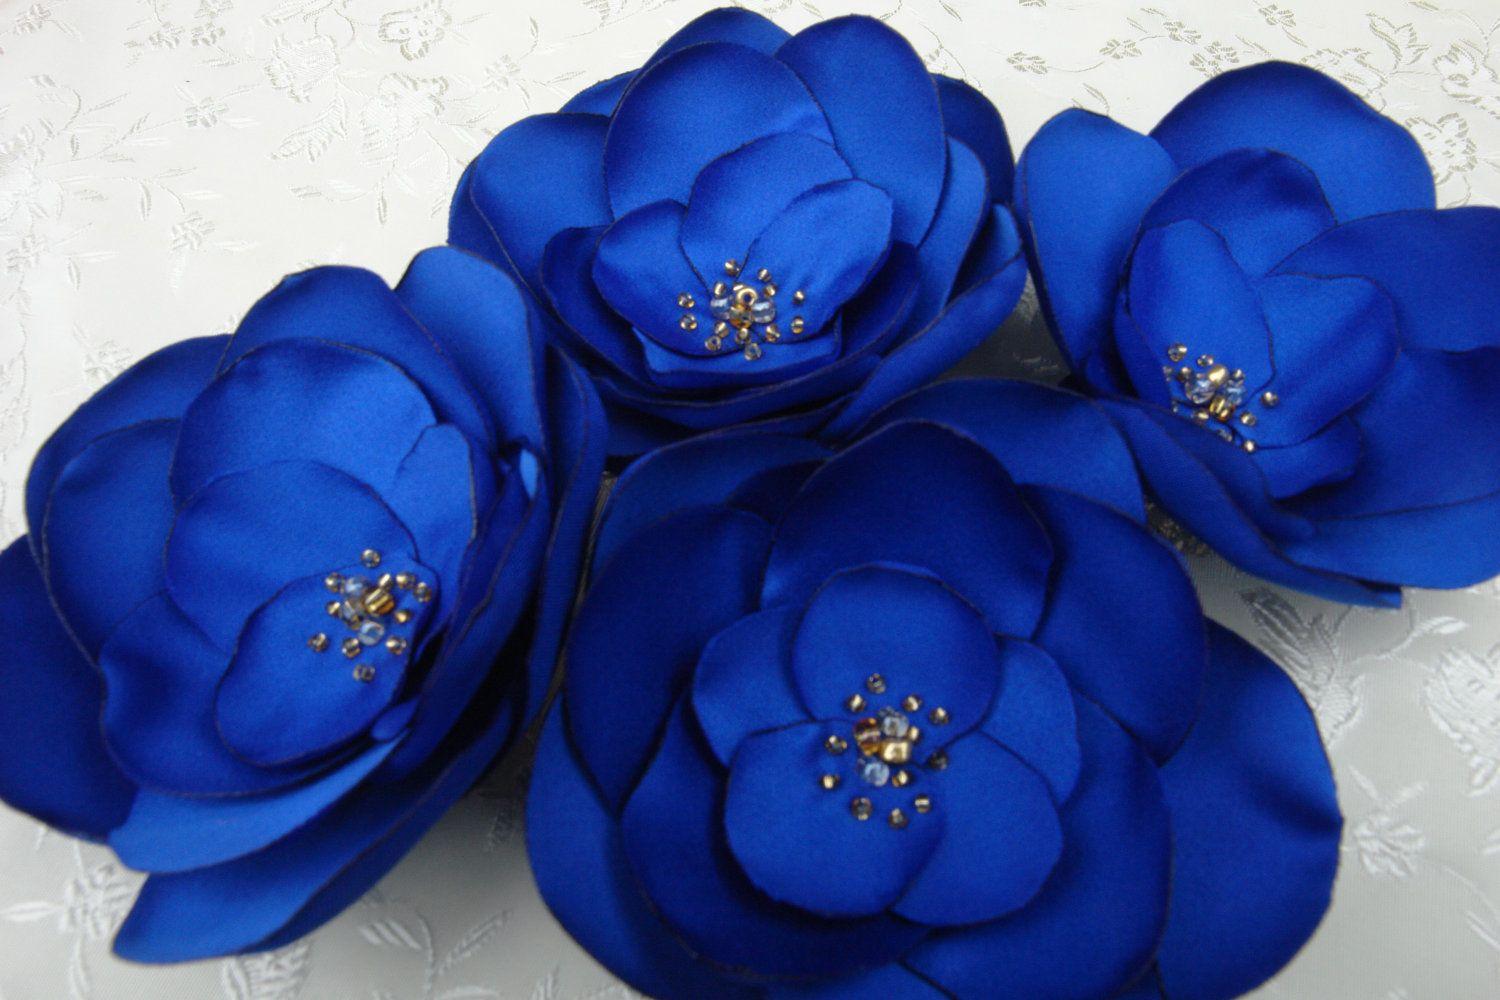 Royal Blue Flowers HD Wallpapers - Top Free Royal Blue Flowers HD